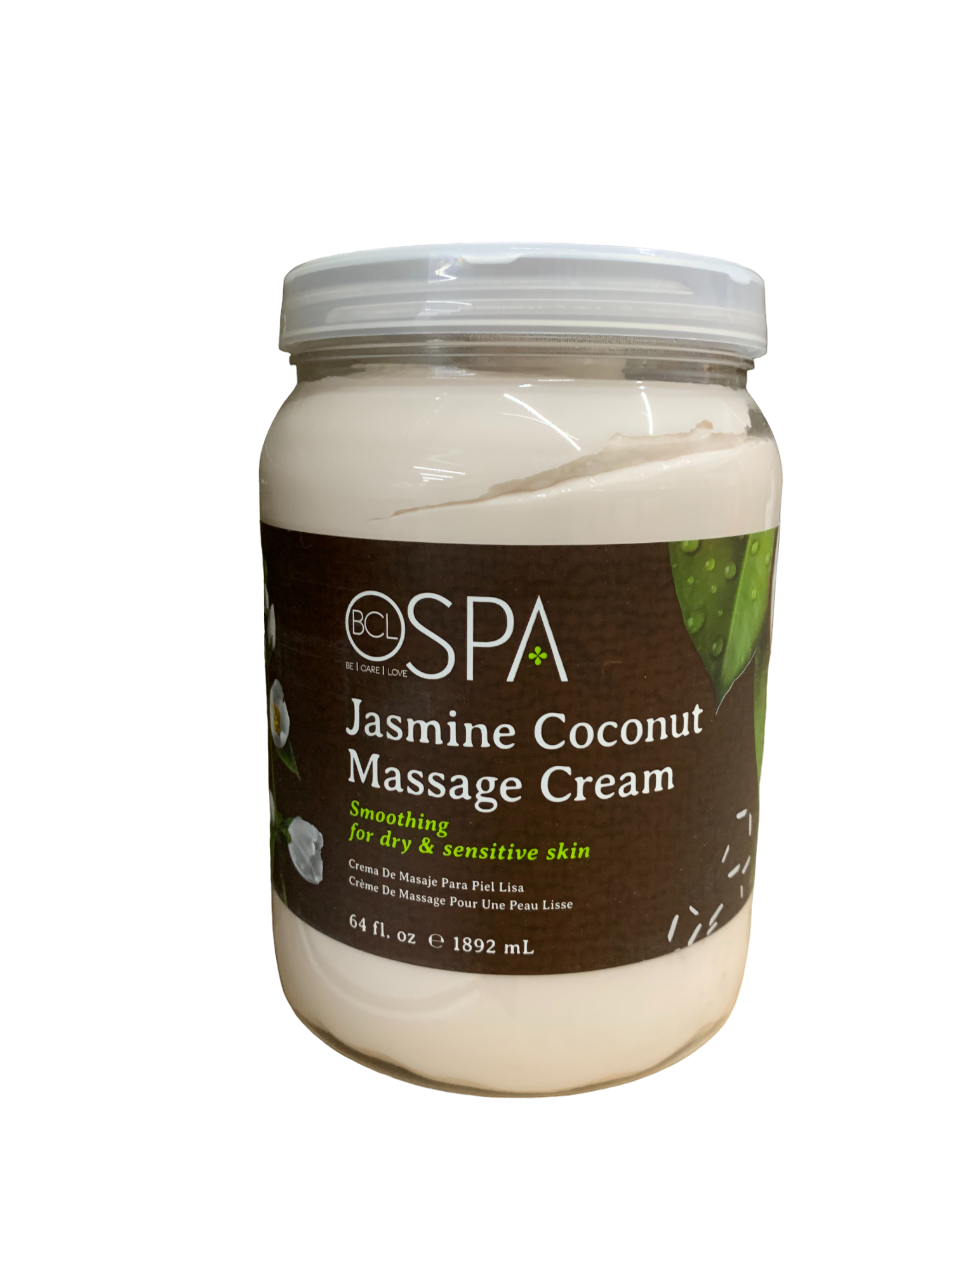 BCL Spa Massage Cream Jasmine Coconut